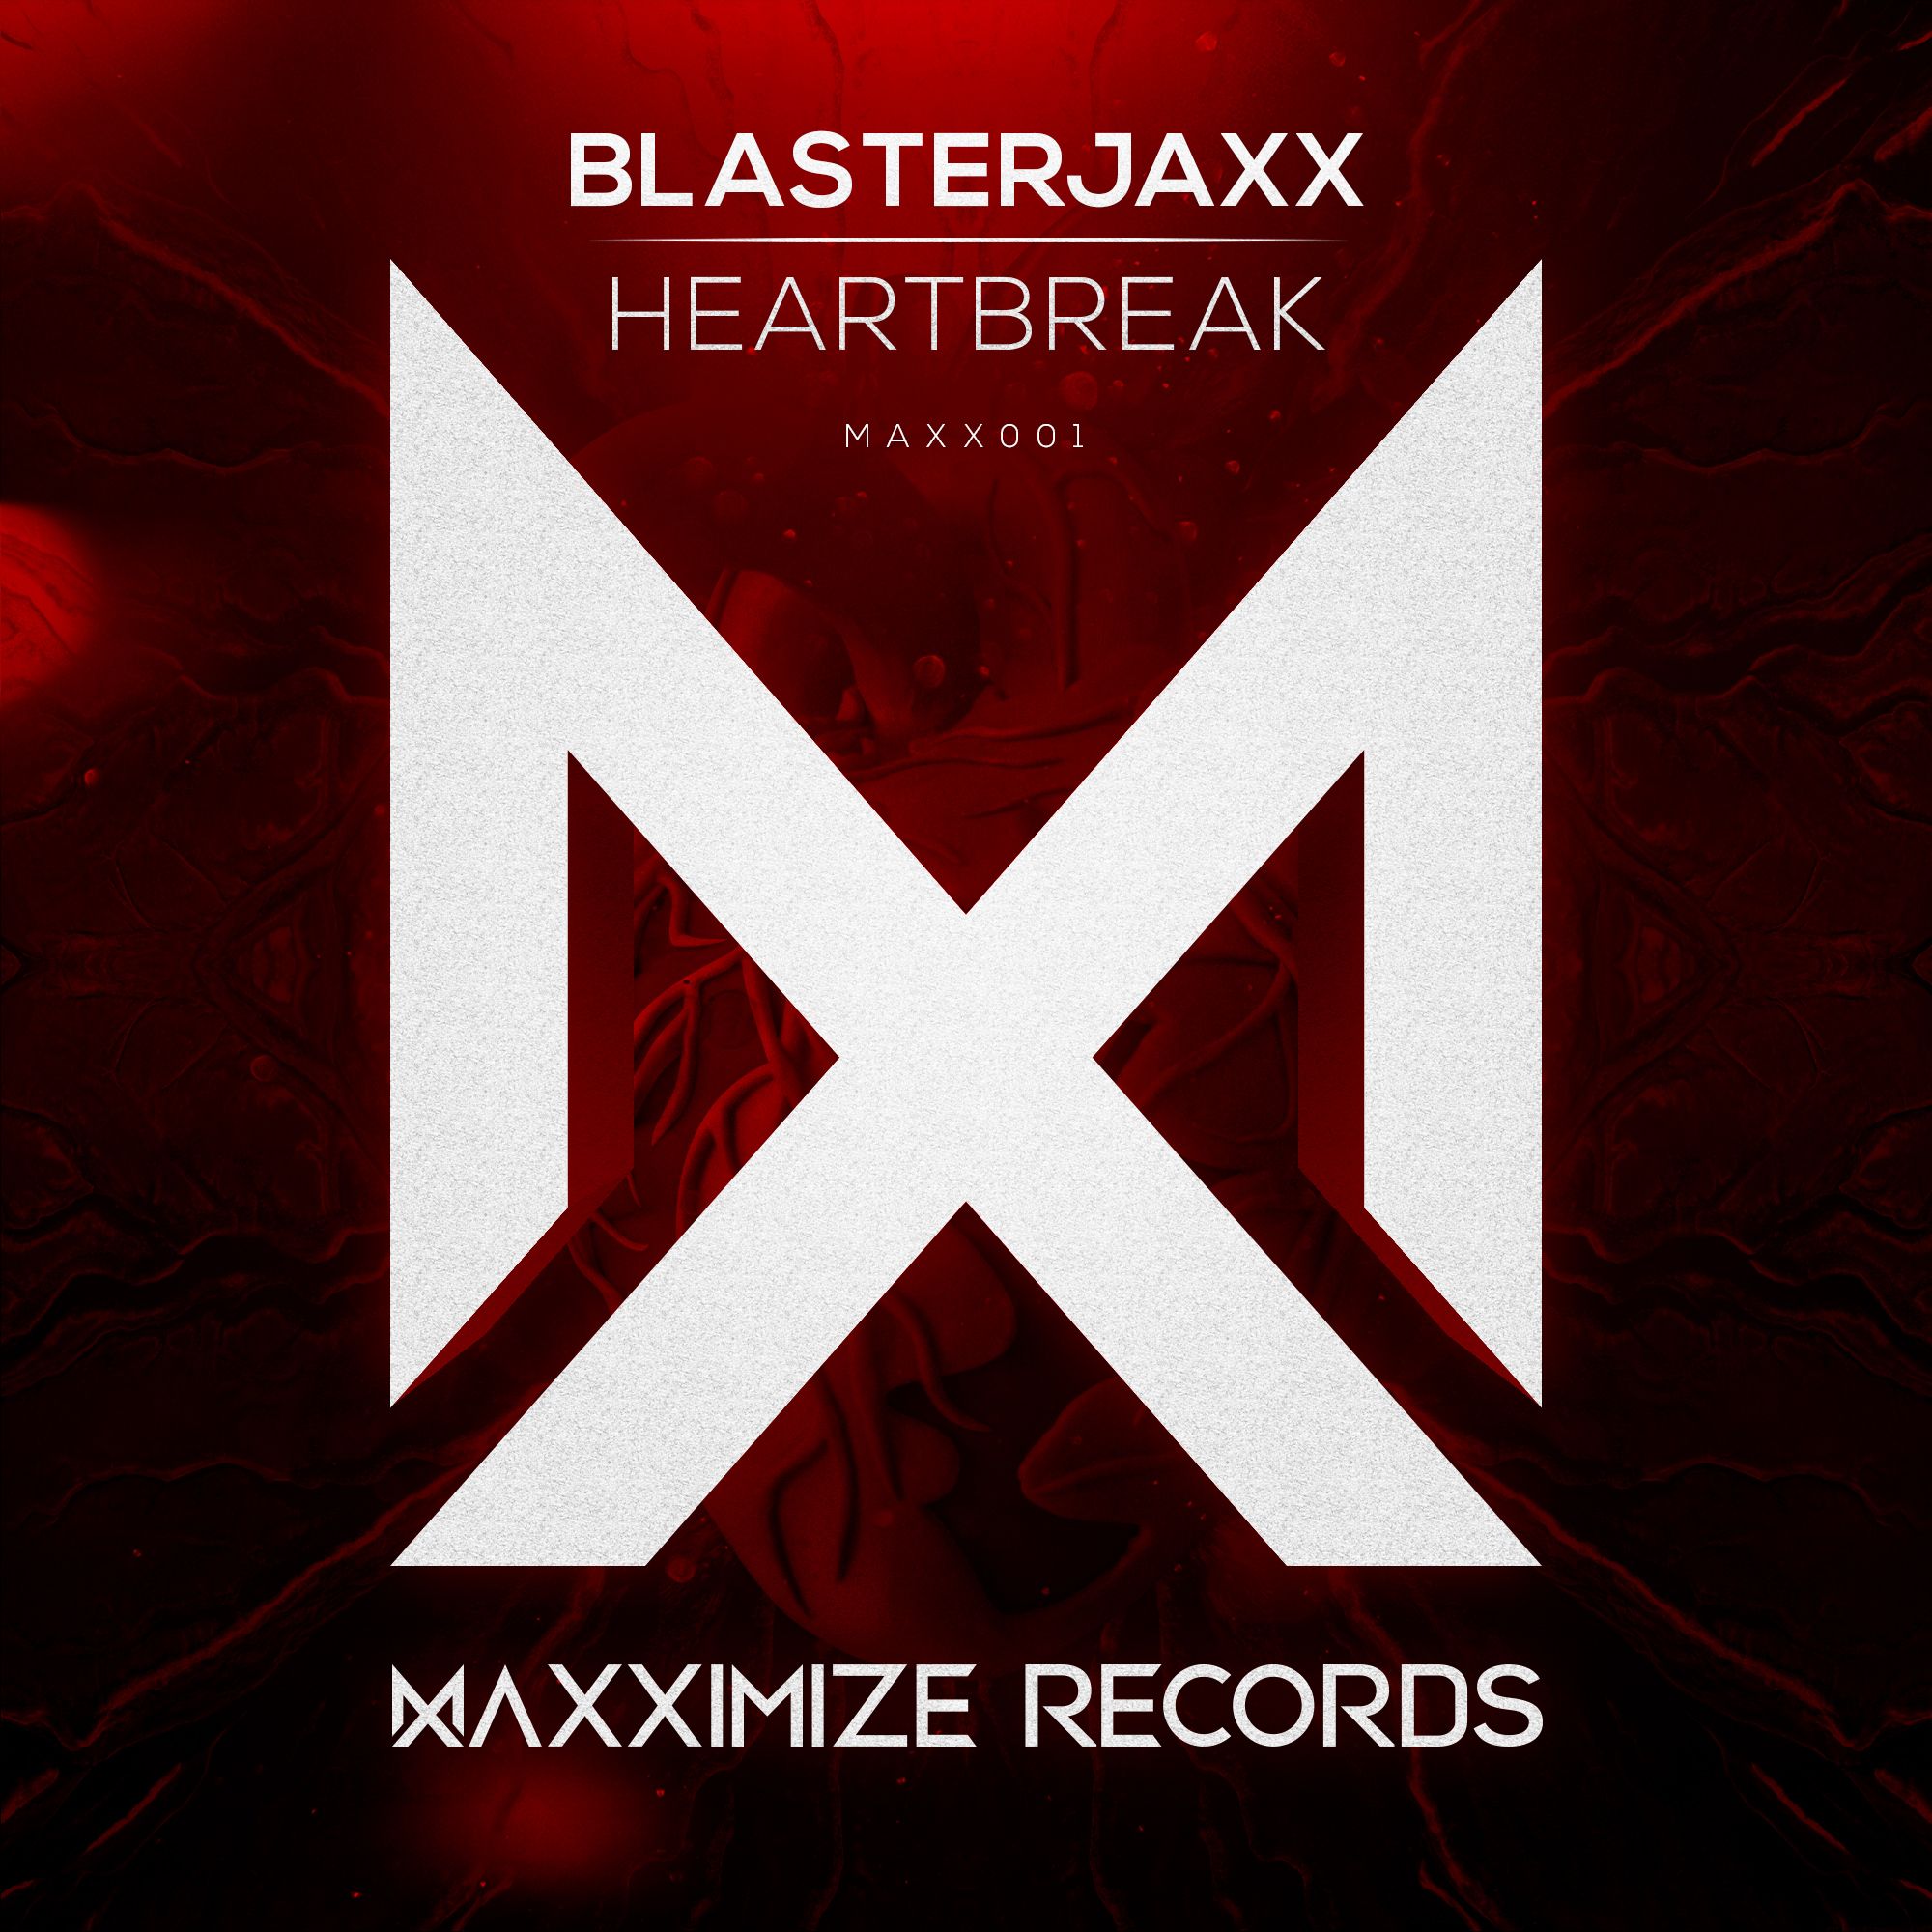 maxx001_blasterjaxx_heartbreak_cover_hr3.jpg